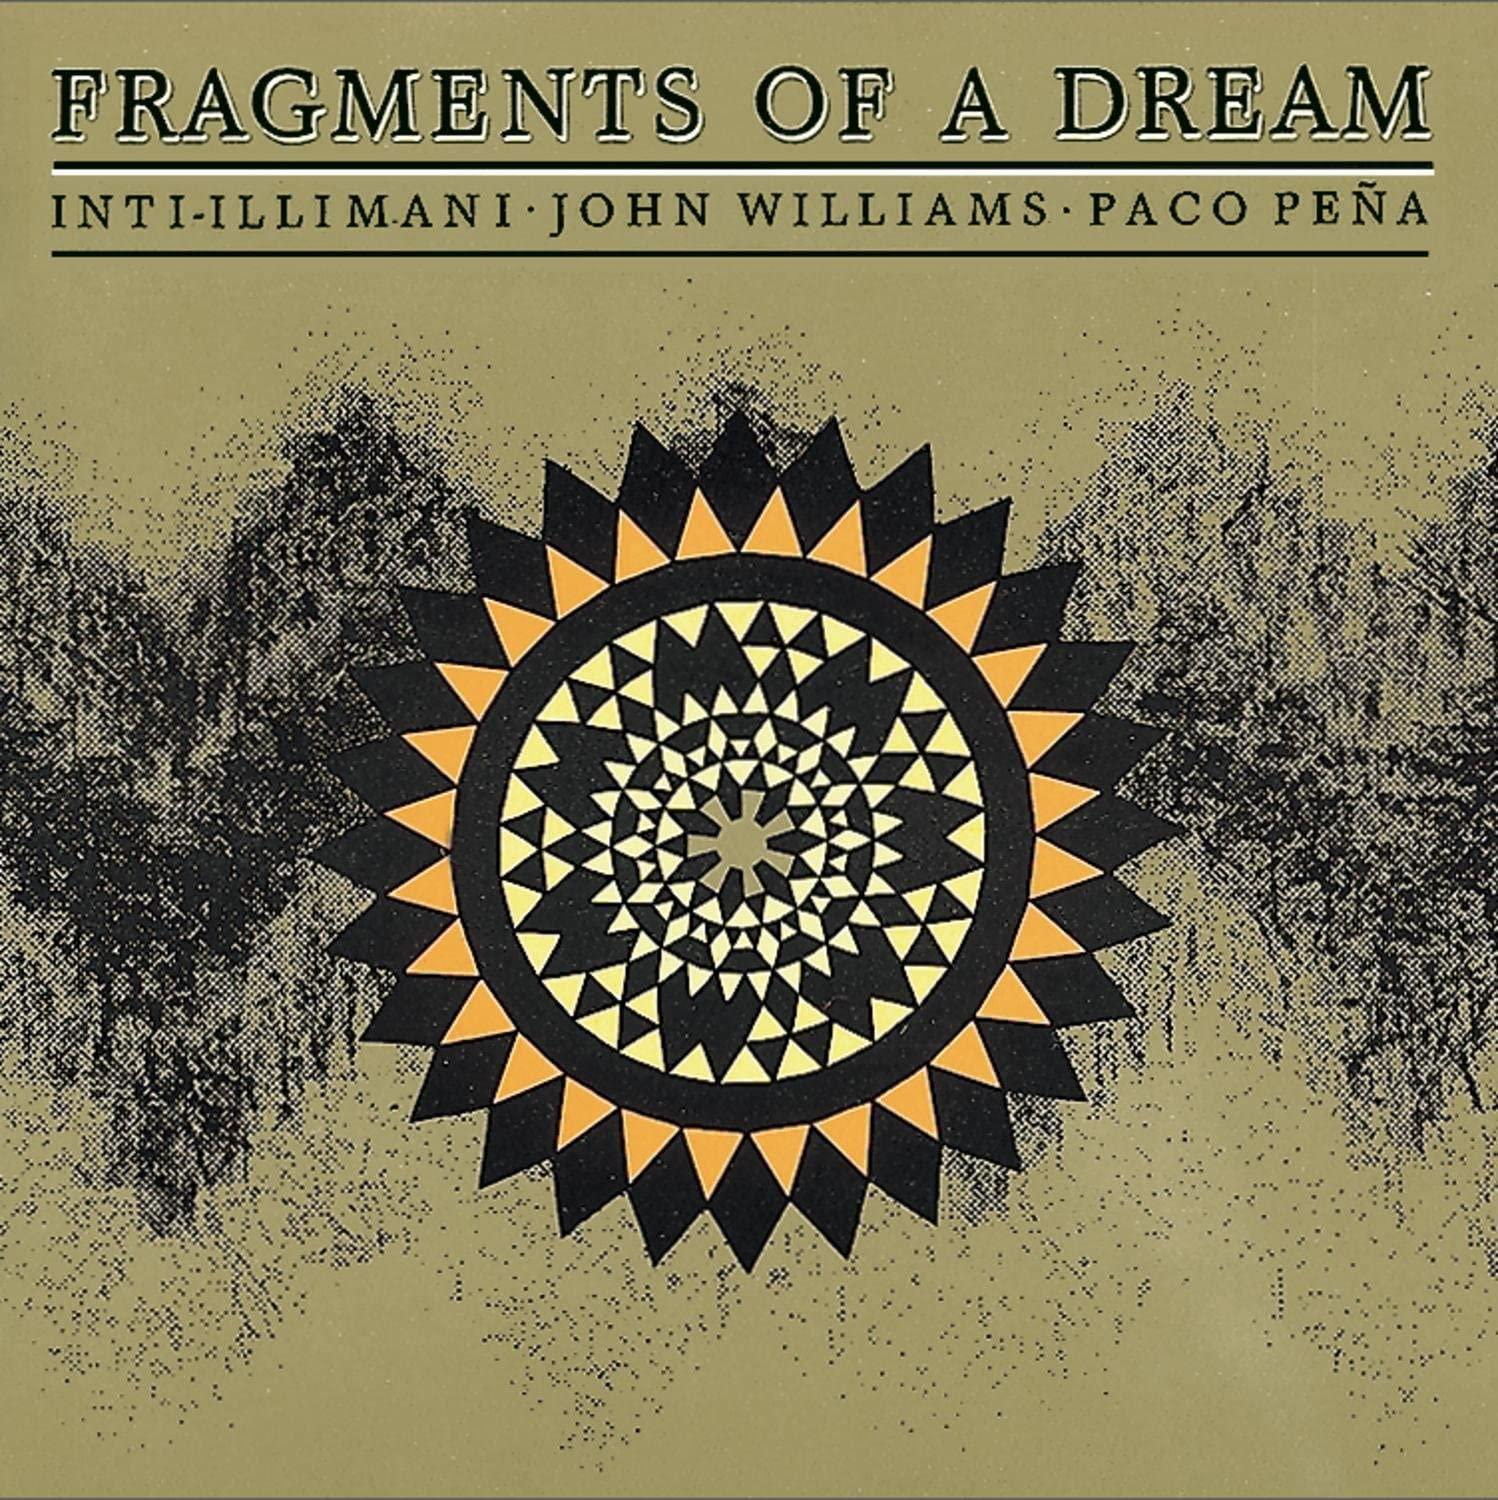 John Williams - Fragments of a dream